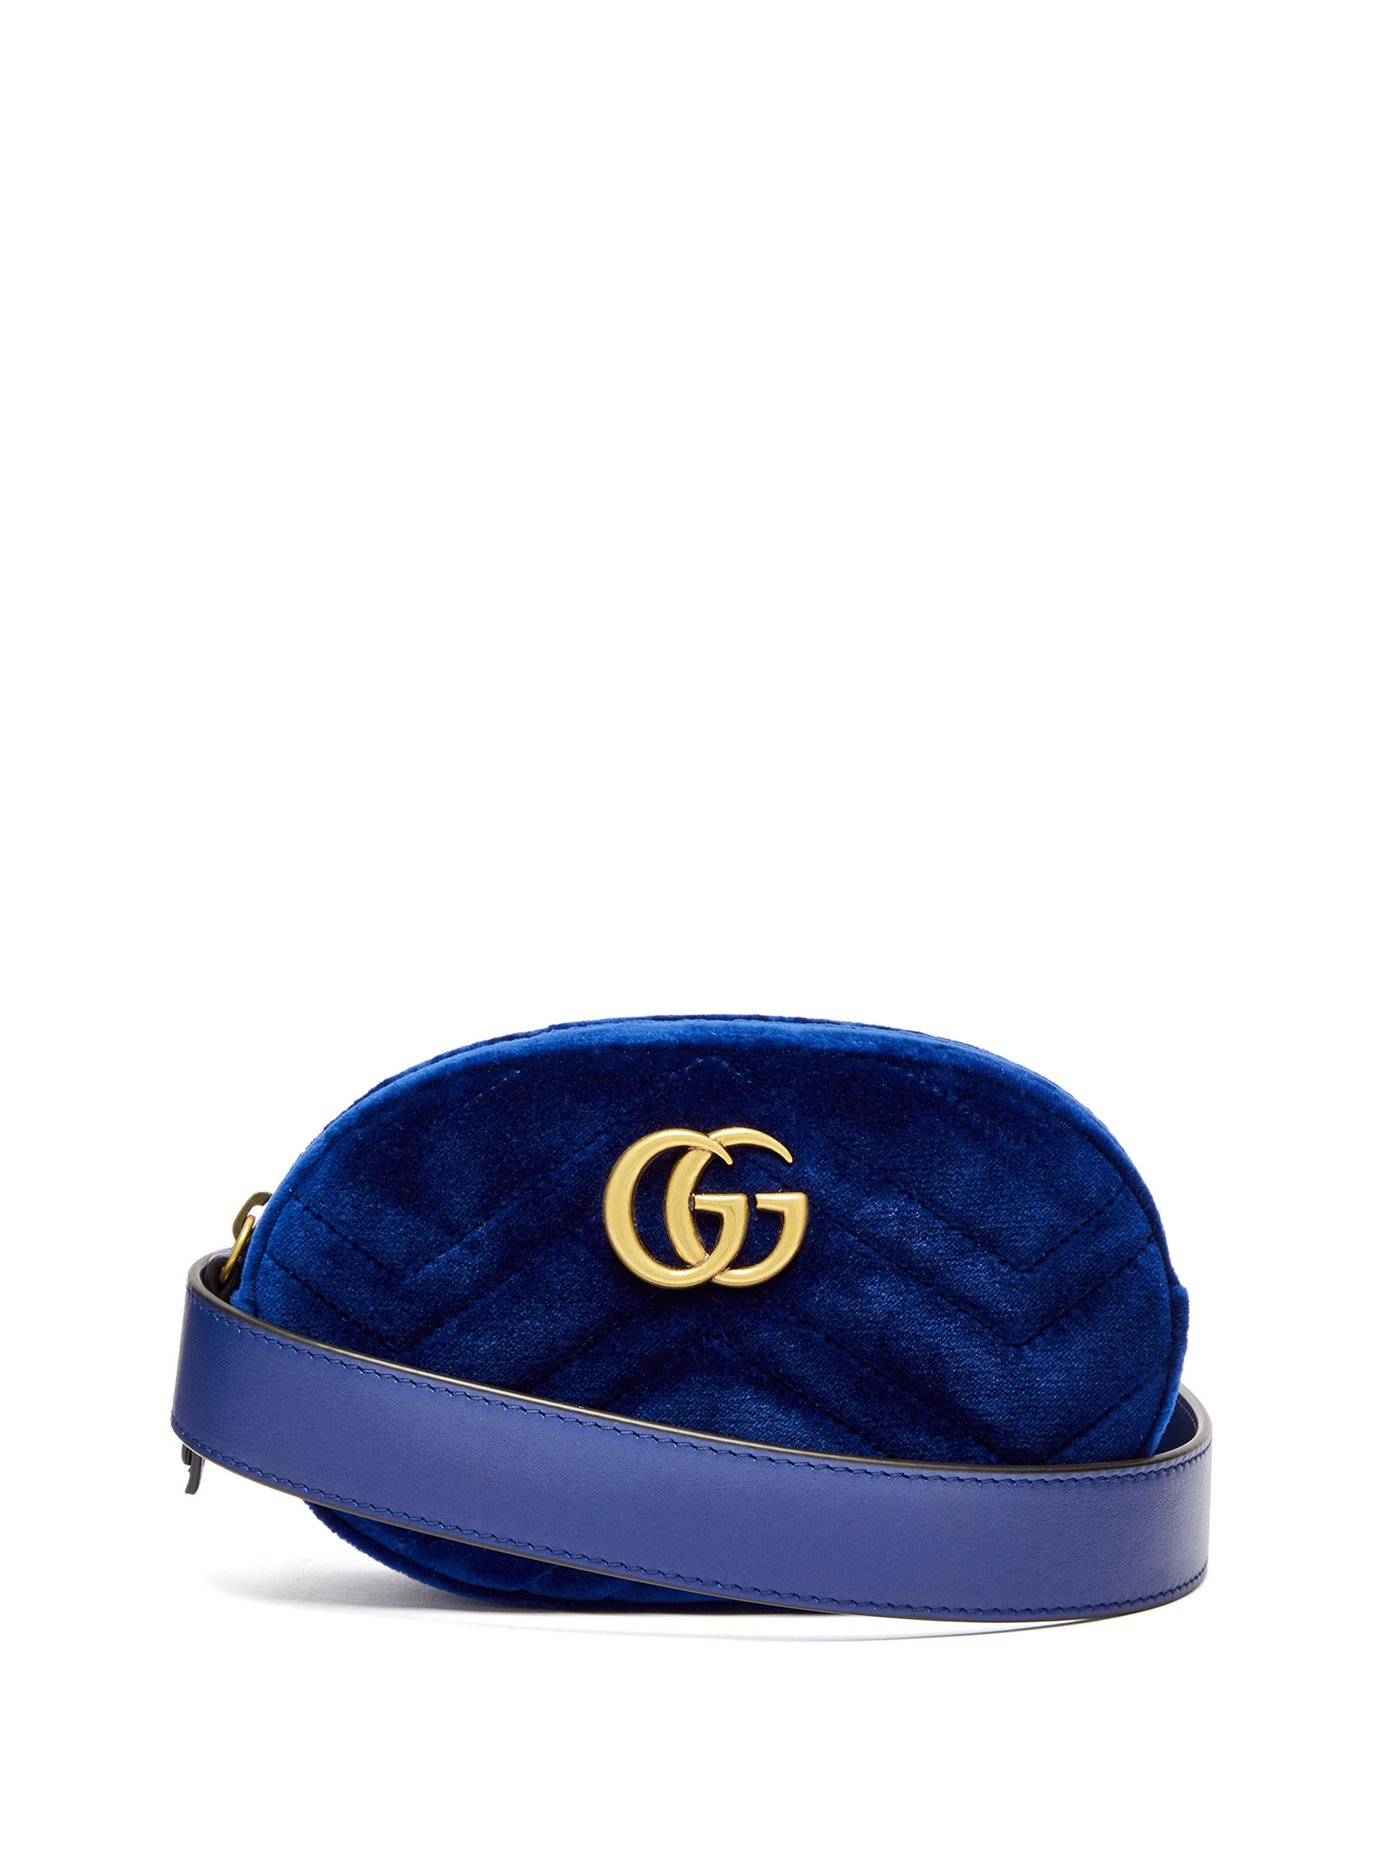 gucci blue belt bag